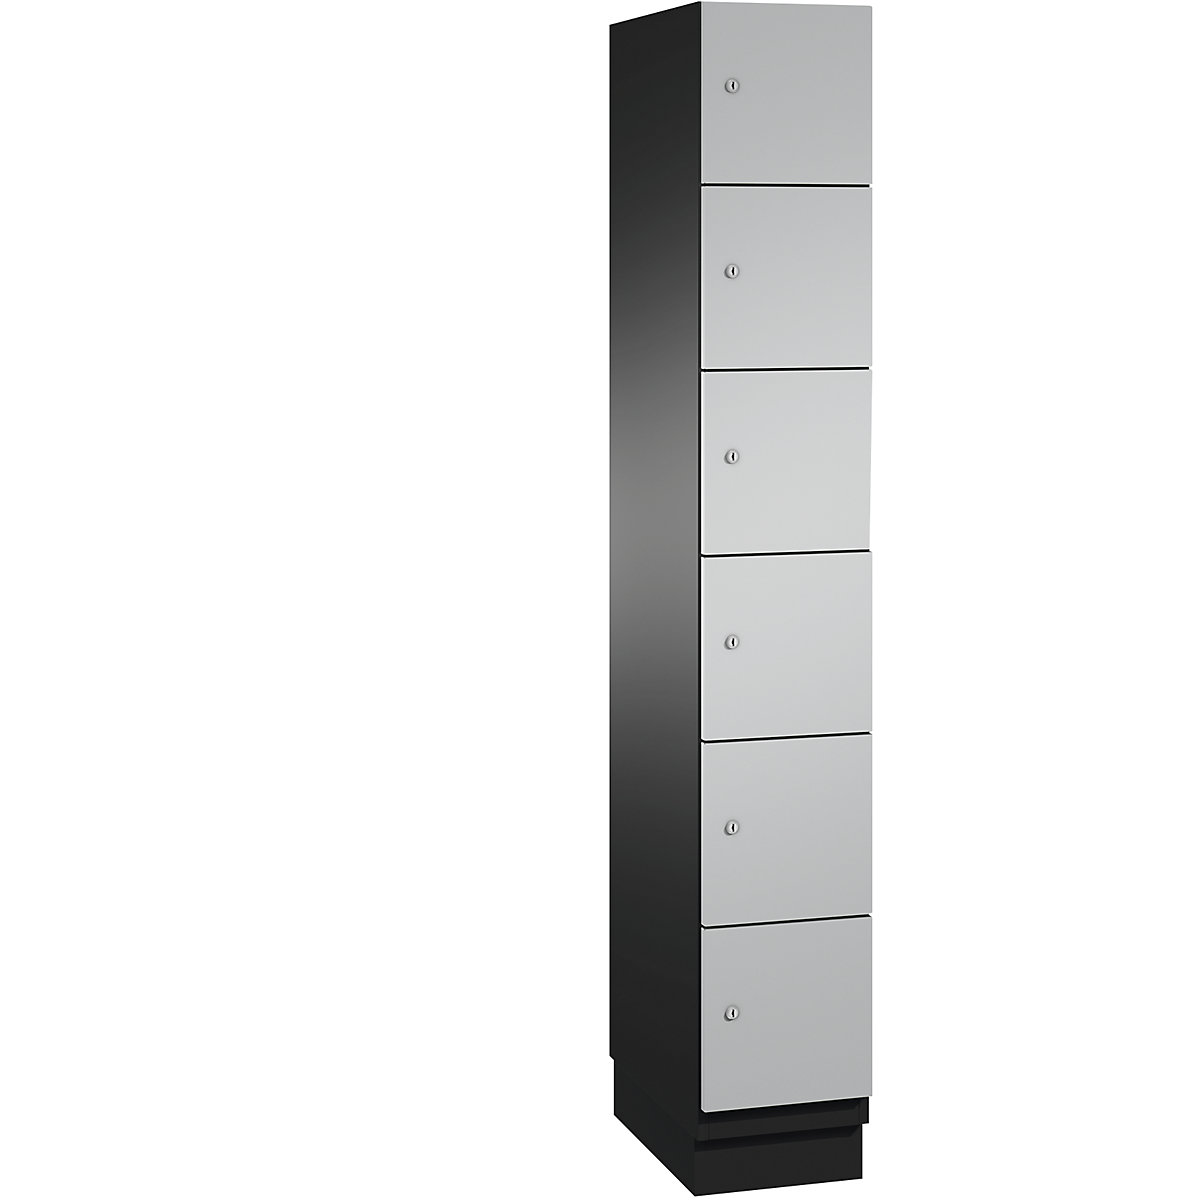 CAMBIO compartment locker with sheet steel doors – C+P, 6 compartments, width 300 mm, body black grey / door white aluminium-13